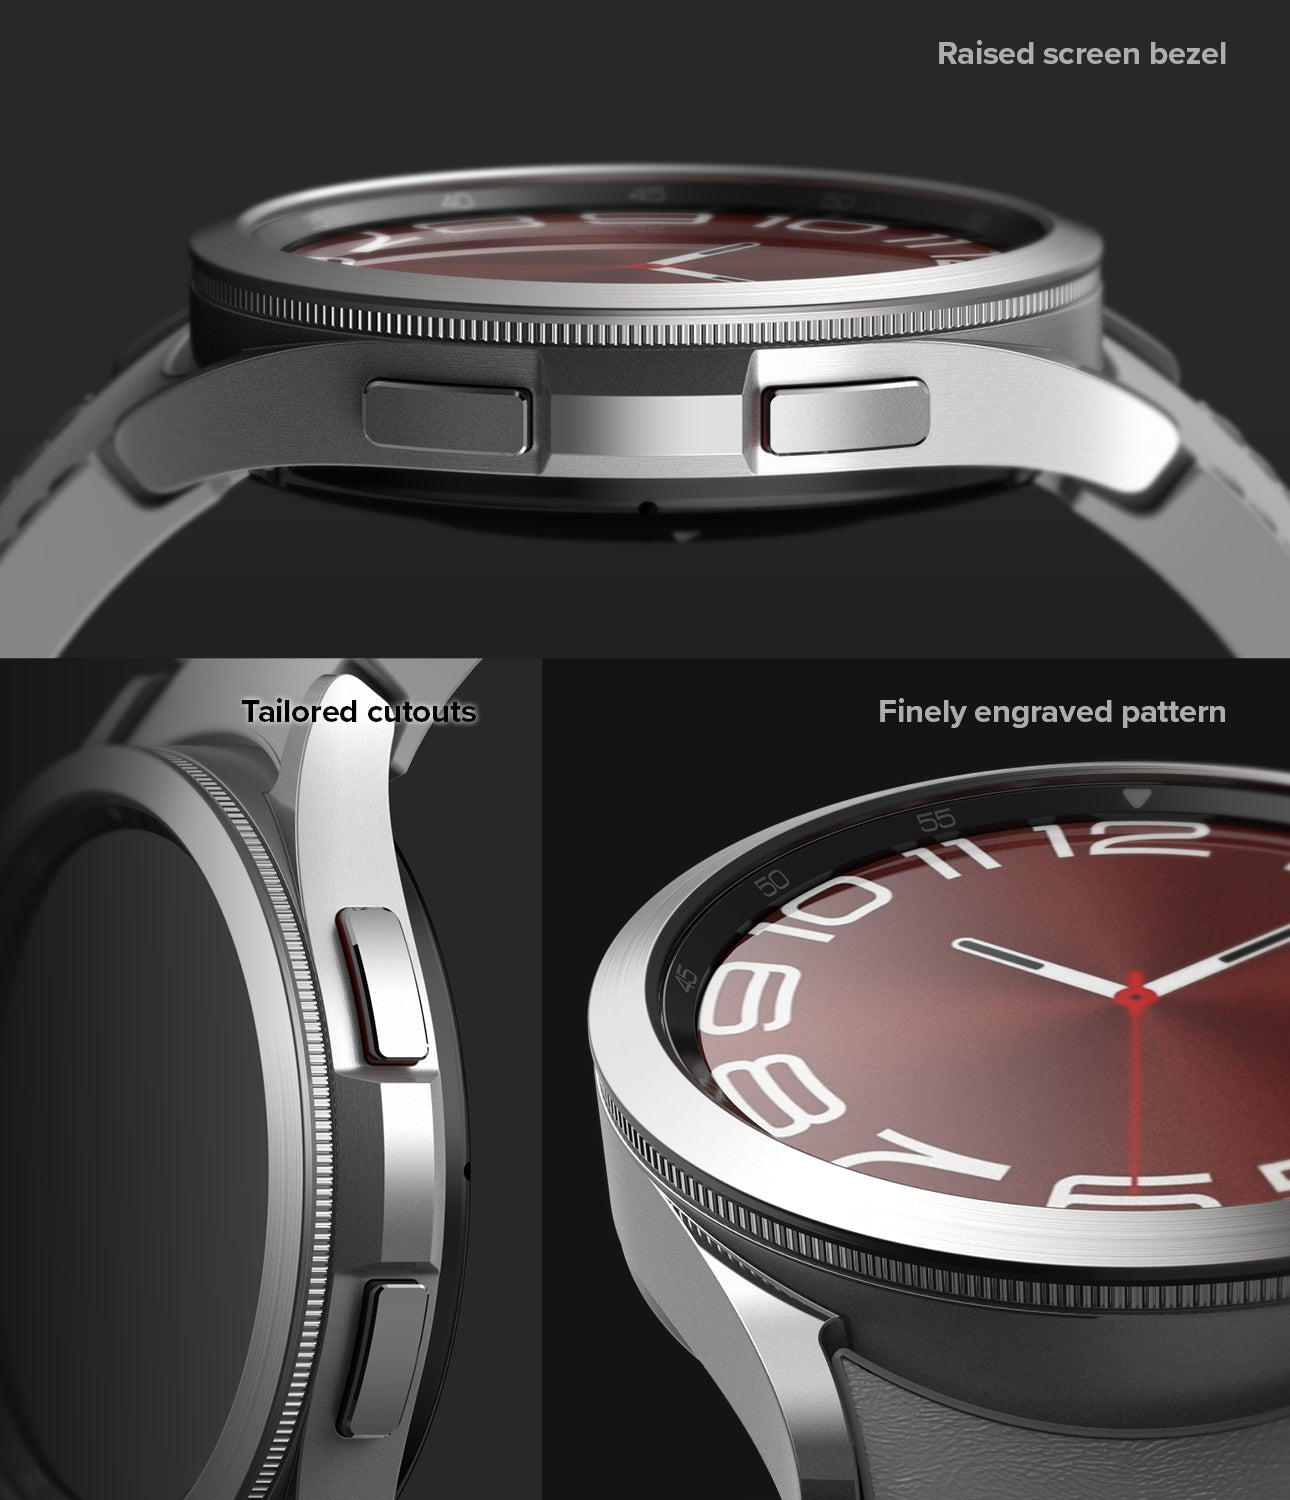 Ringke Bezel Styling  Galaxy Watch 6 Classic 47mm - 04 Silver – Ringke  Official Store